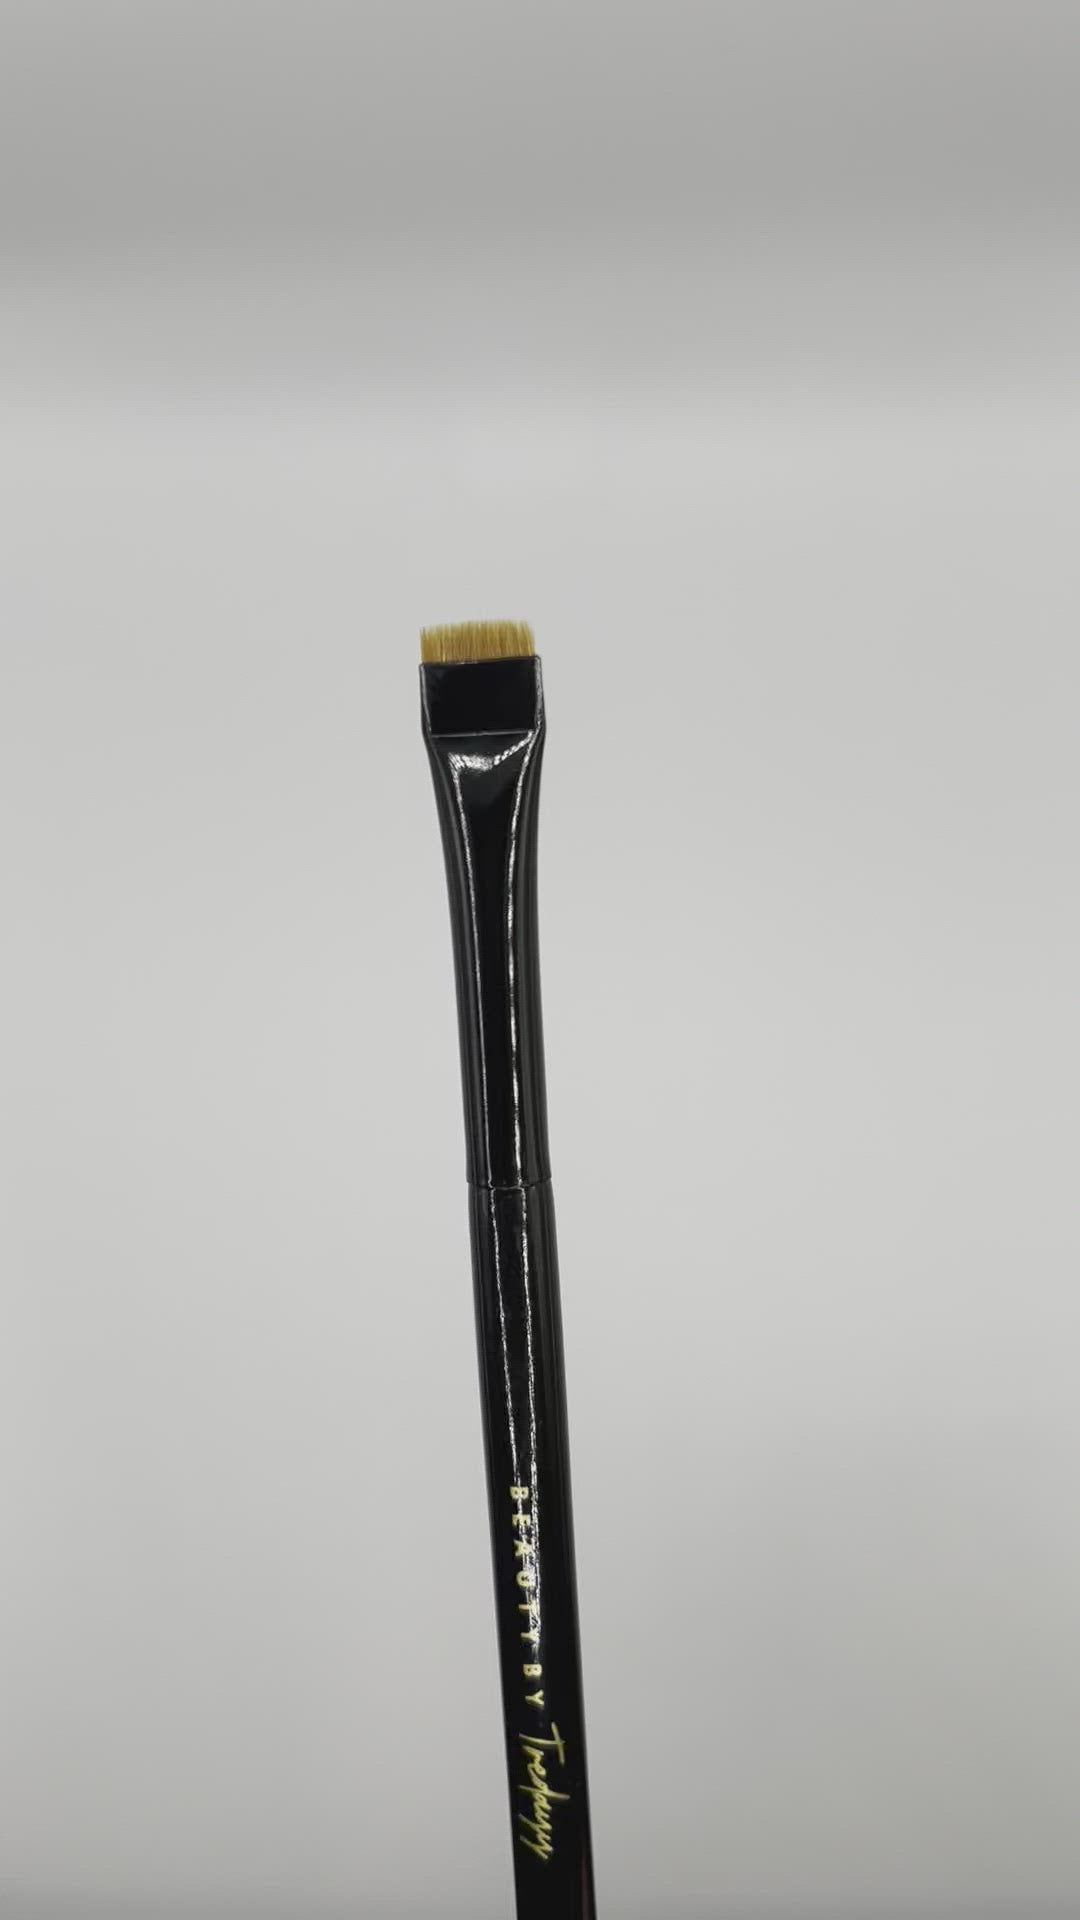 Trixie Cosmetics P-01 Small Flat Definer Brush